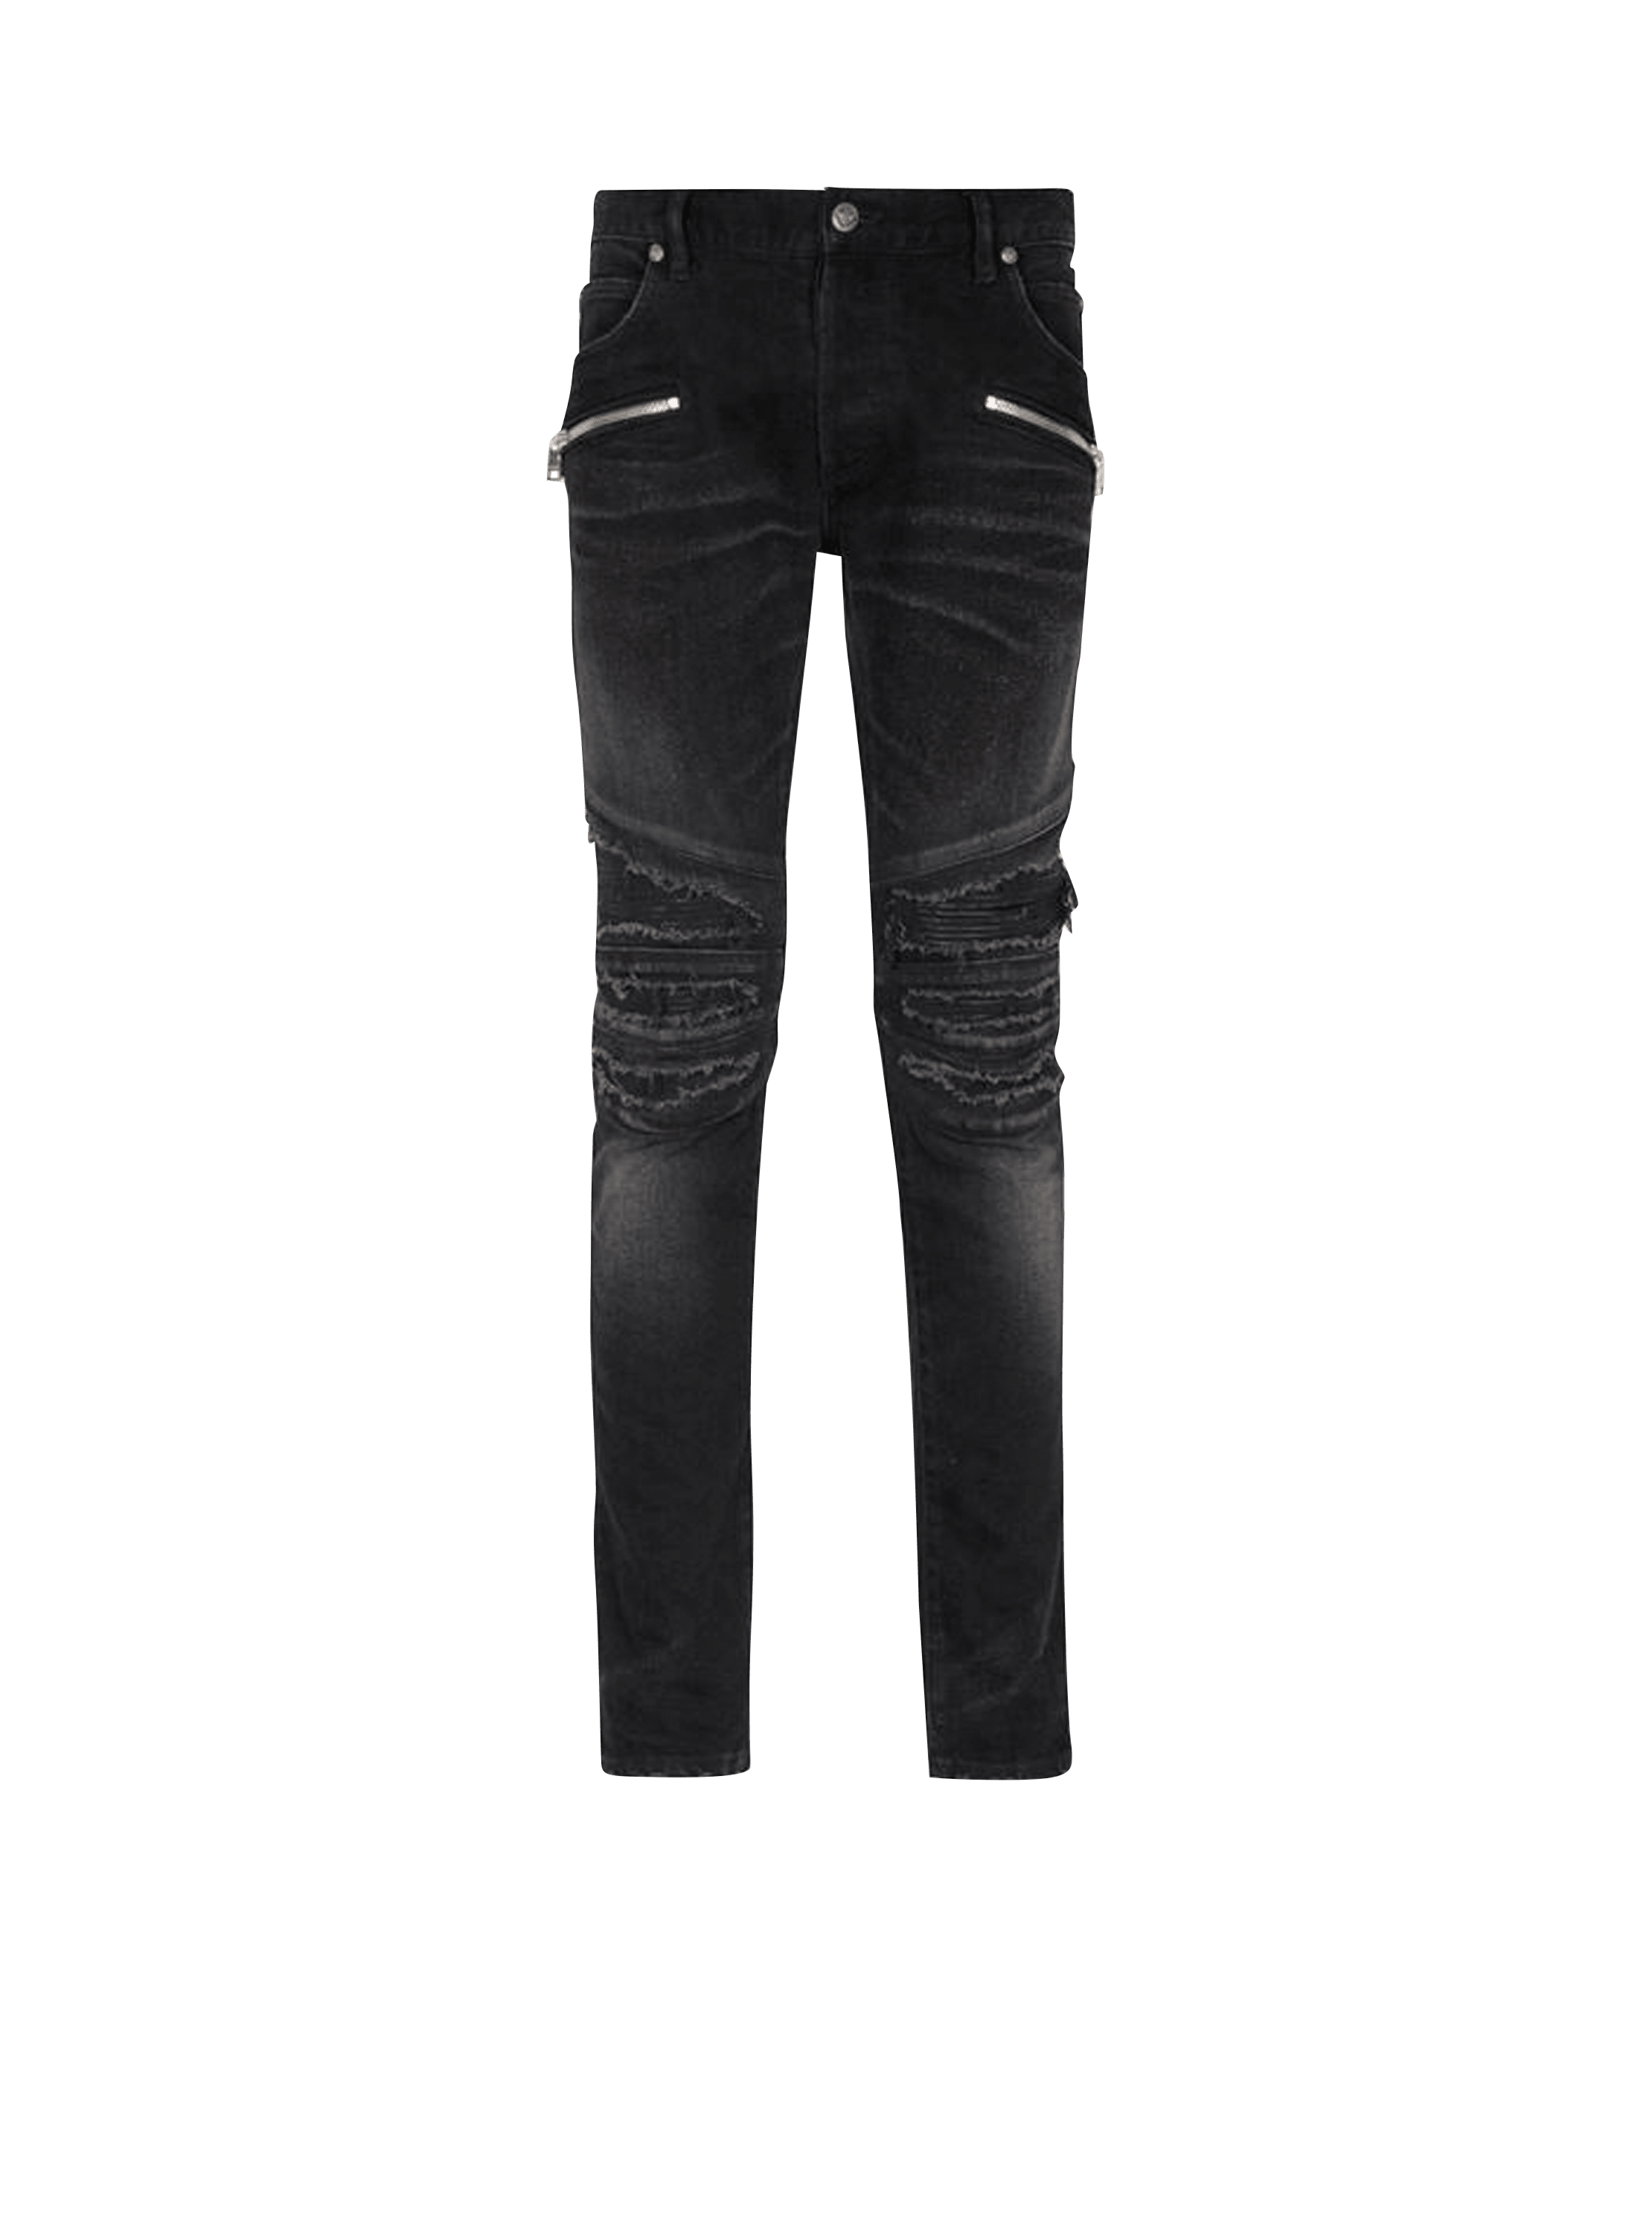 Slim cut ripped cotton jeans, black, hi-res